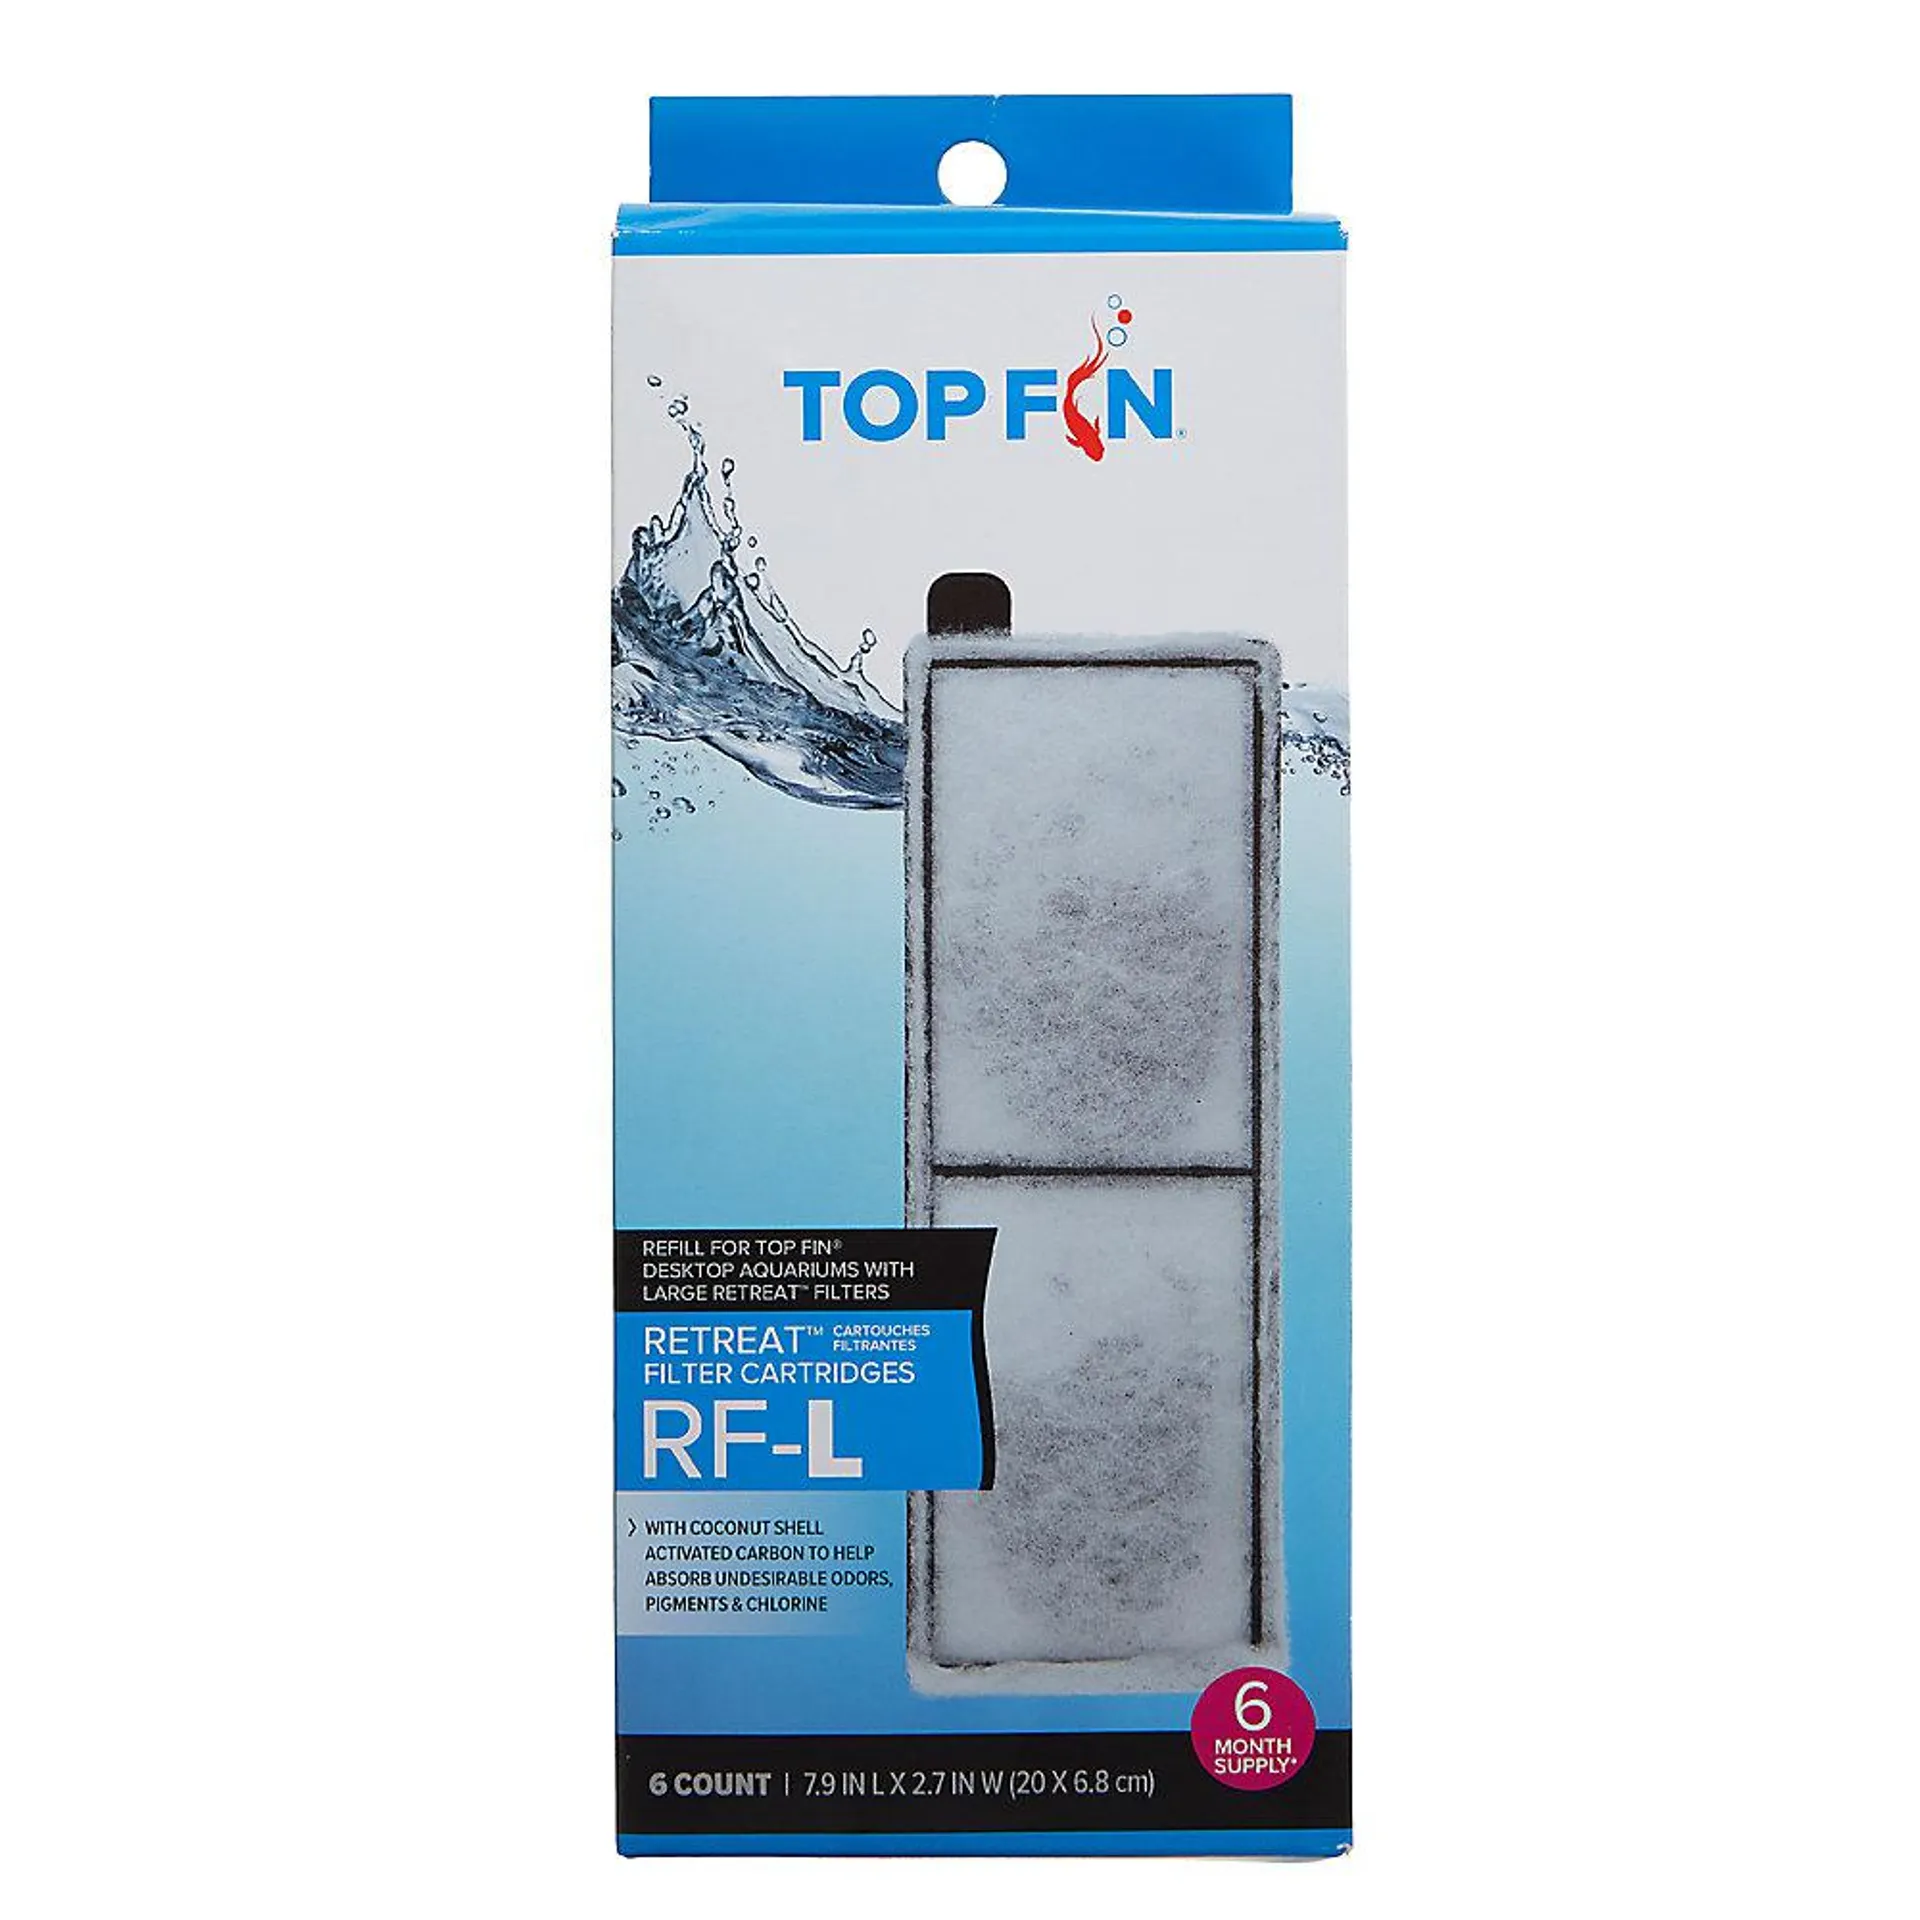 Top Fin® Retreat™ RF-L Filter Cartridges